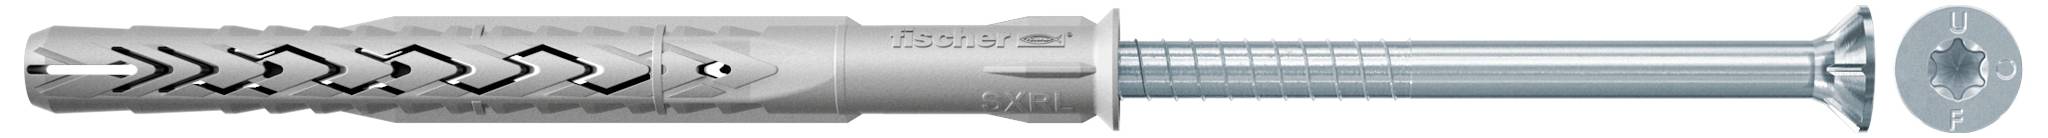 Fischer SXRL 10 x 120 T K NV hmoždinka s dlouhým dříkem 120 mm 536192 1 sada